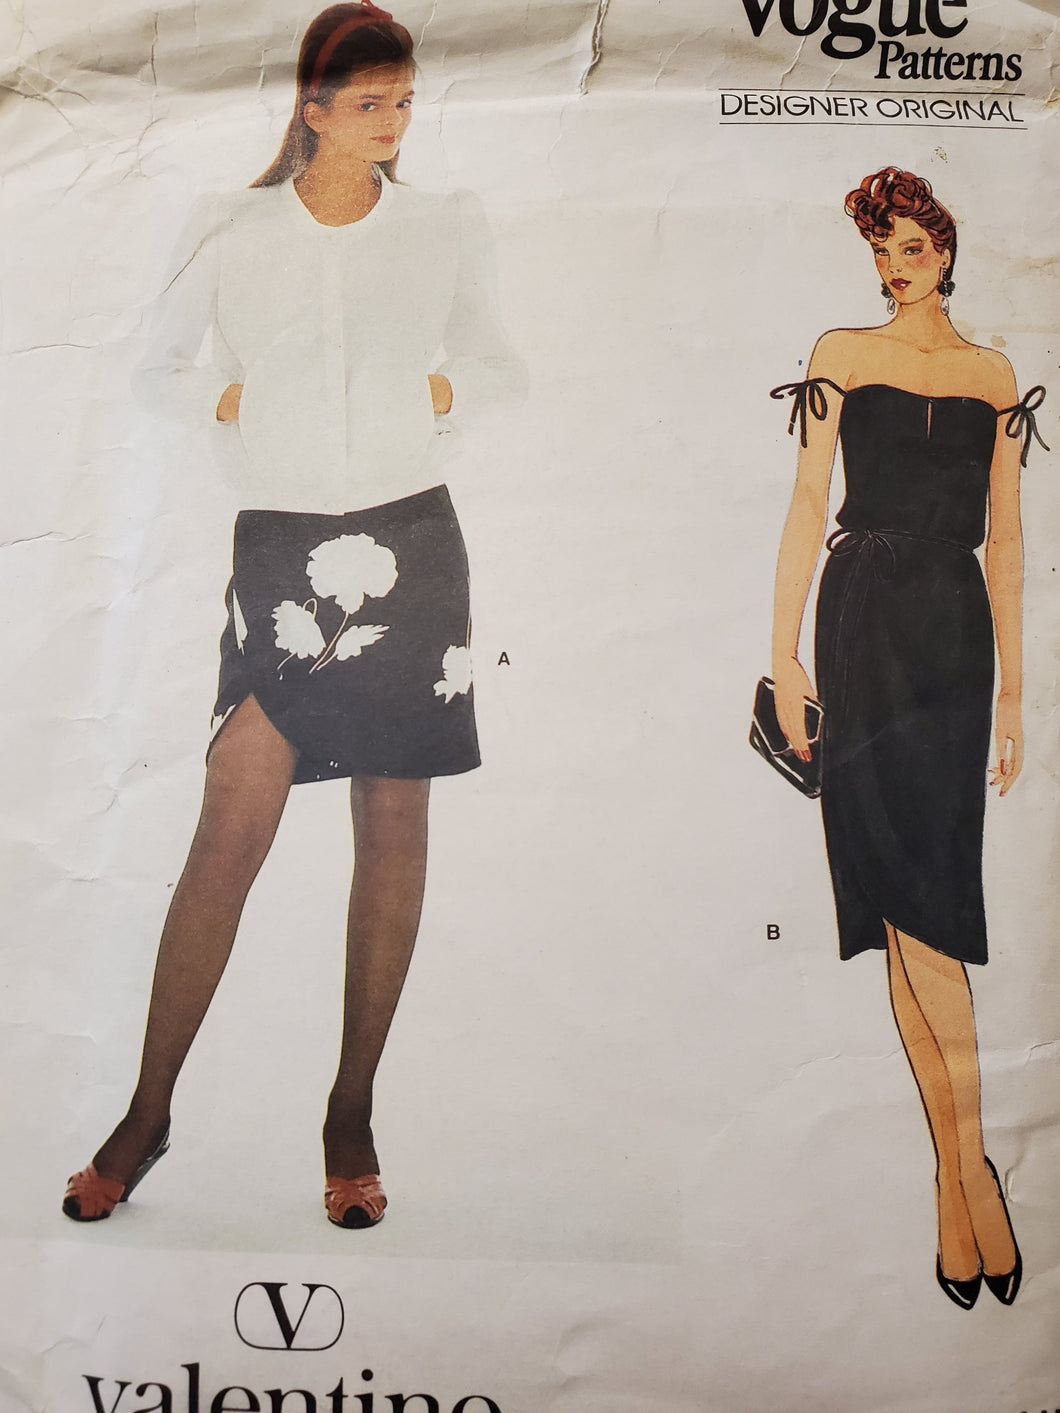 Vogue Pattern 1154 UNCUT, Designer Original Valentino, Dress Size 14, Vintage and Very Rare 